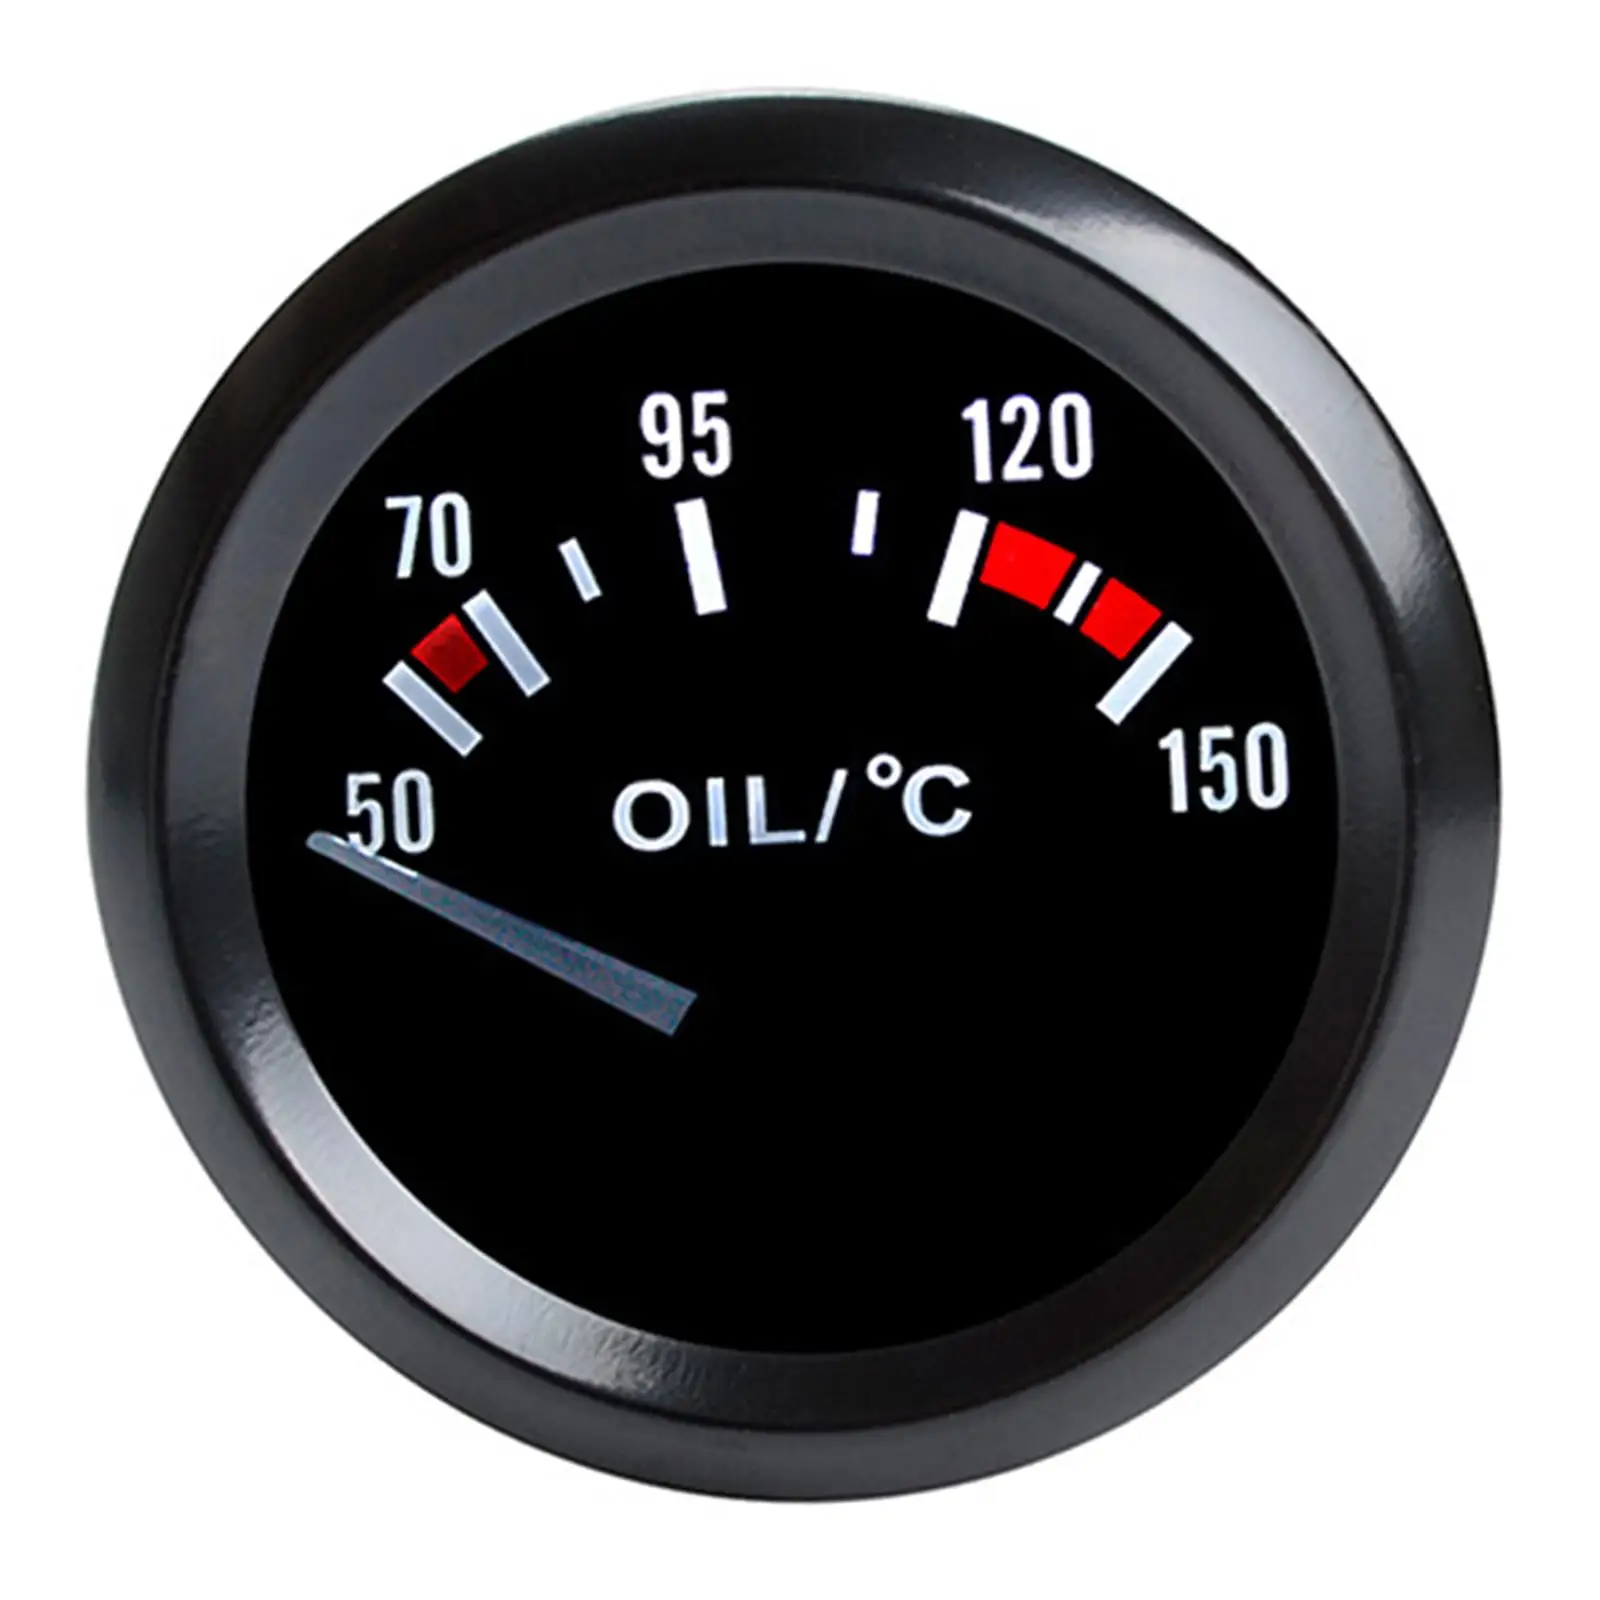 Oil Temp Gauge Premium LED Display Car Accessories Durable Spare Parts Oil Temperature Gauge for Vehicle Automotive Truck